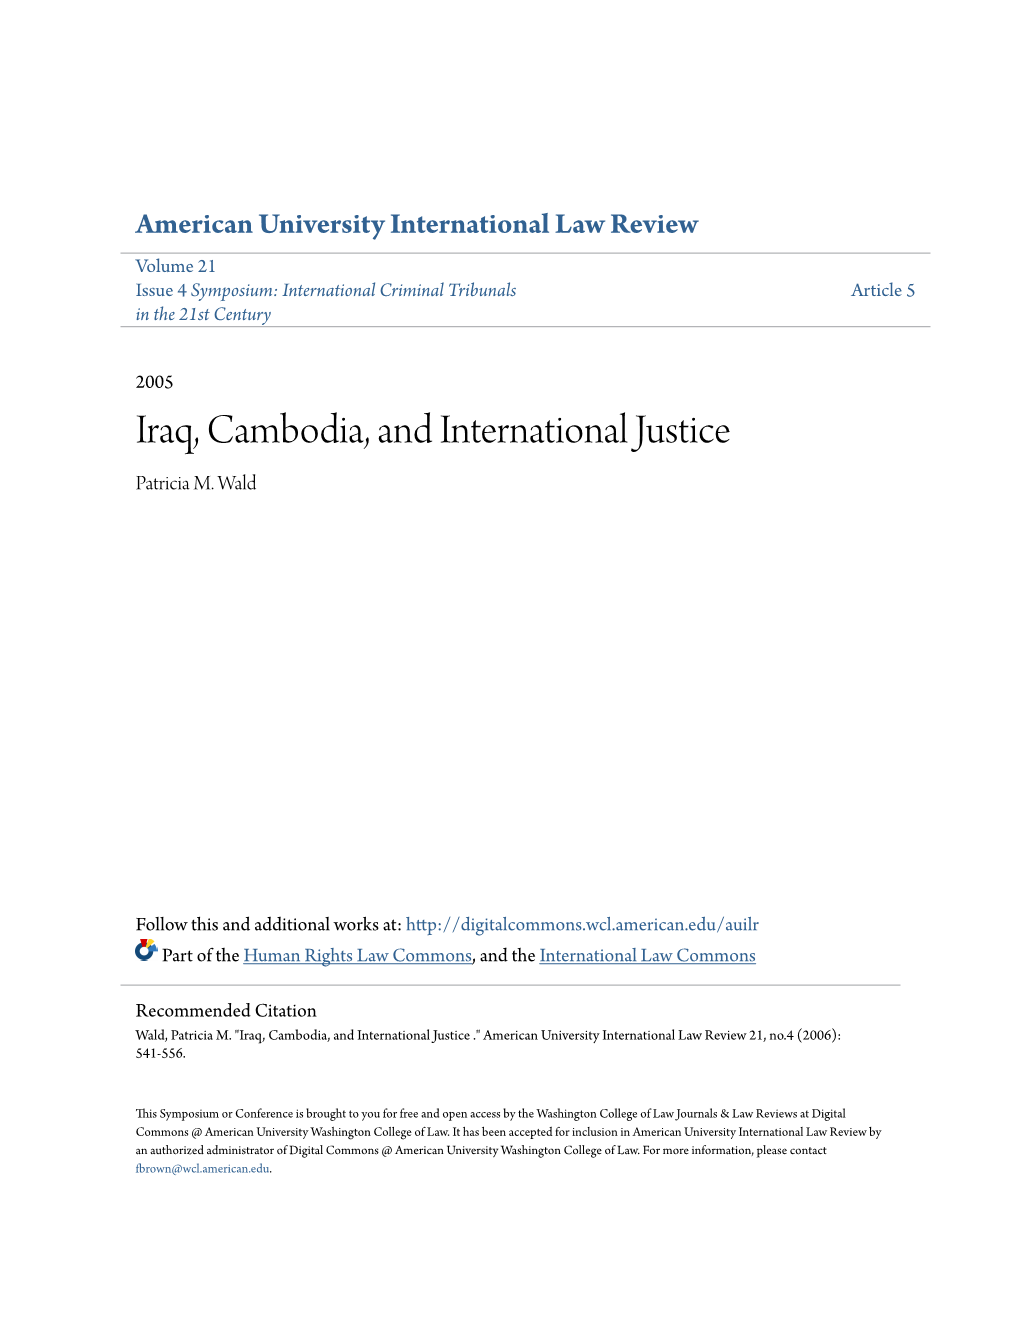 Iraq, Cambodia, and International Justice Patricia M